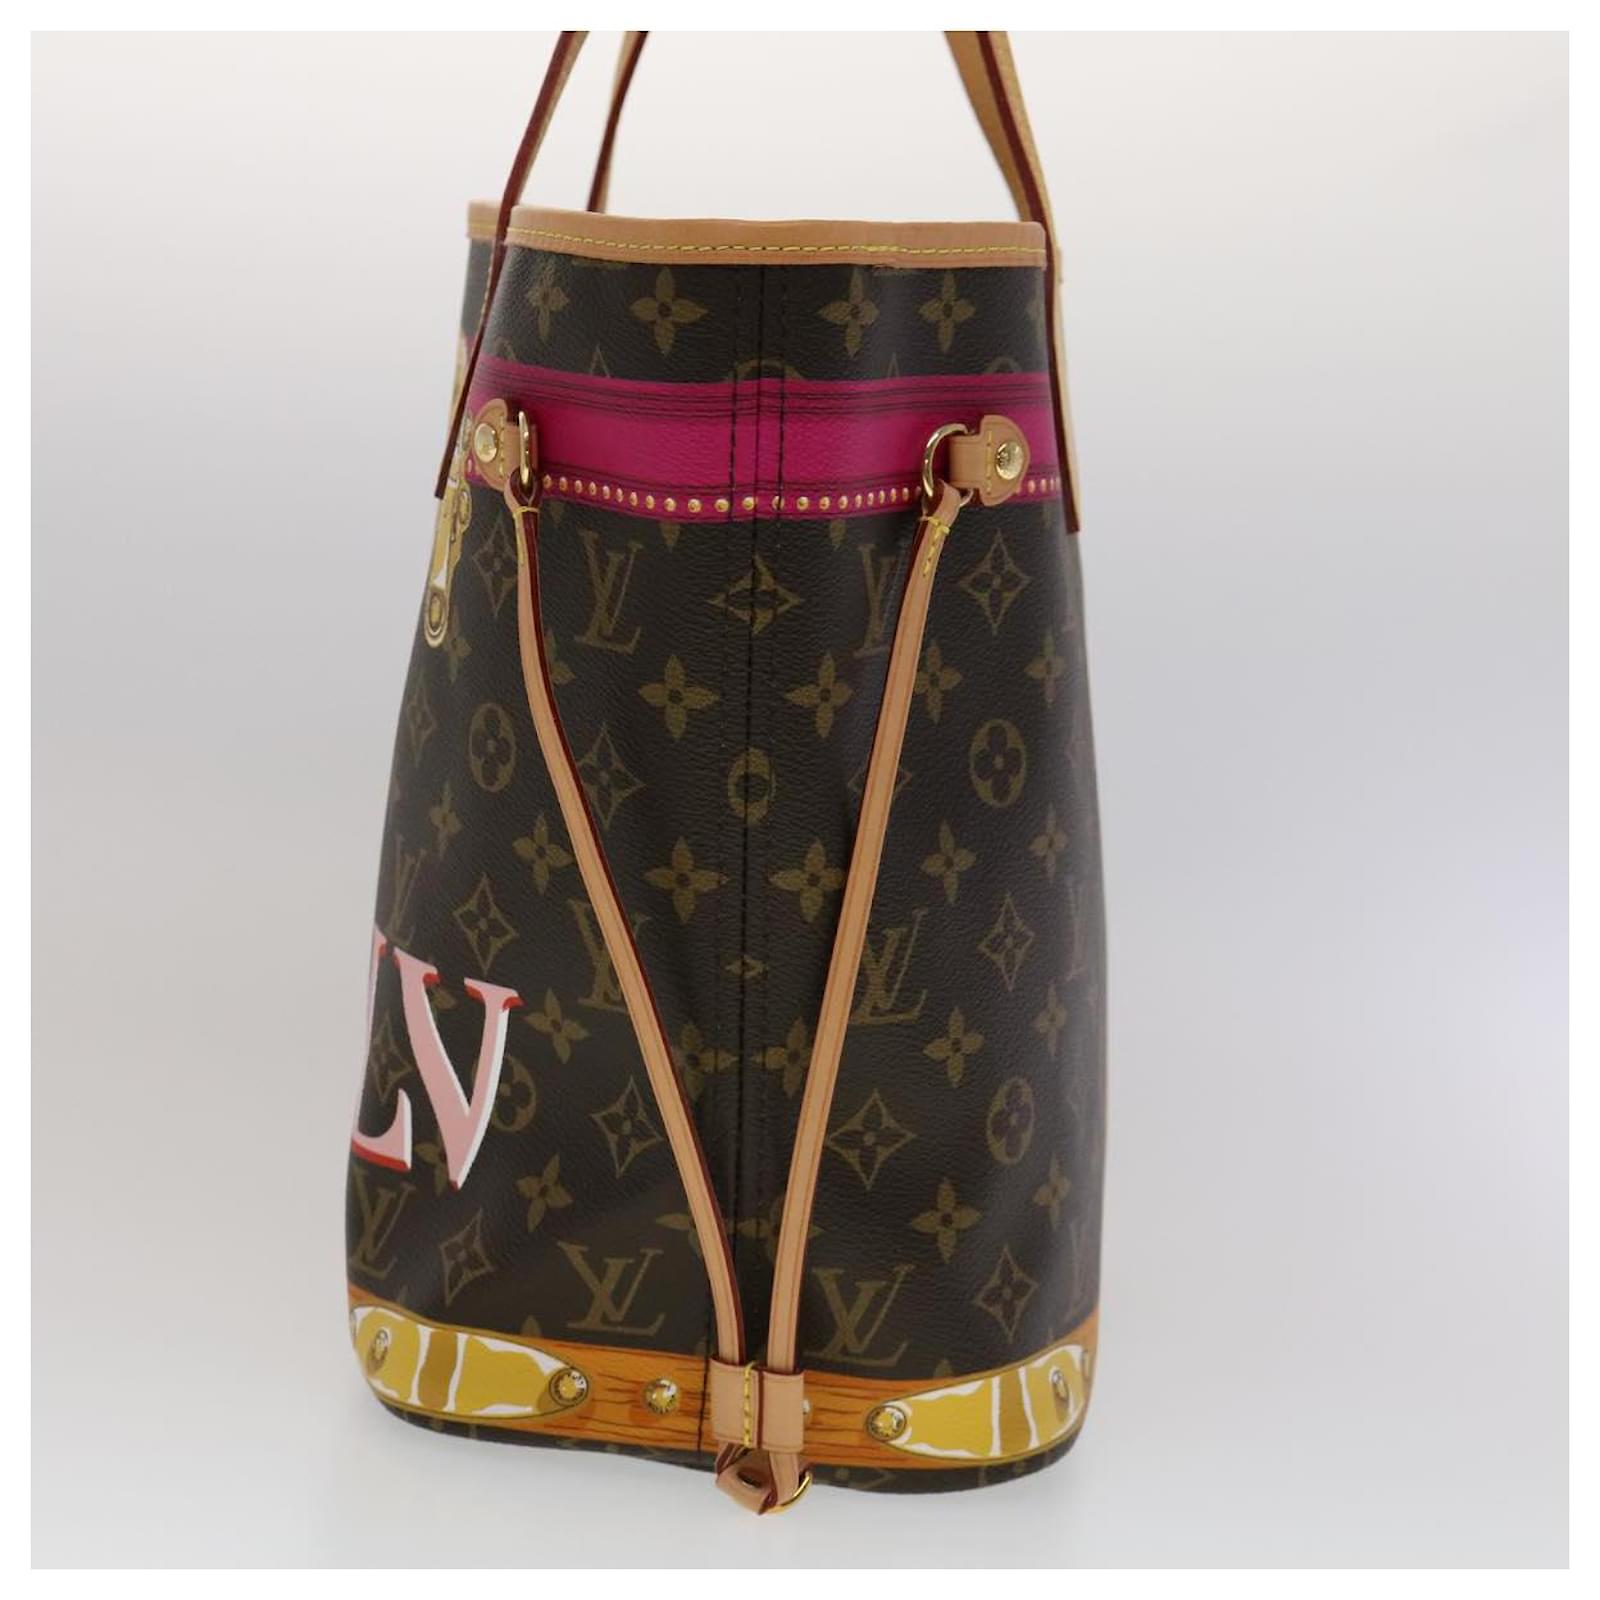 Louis Vuitton Summer Trunks Tote Bags